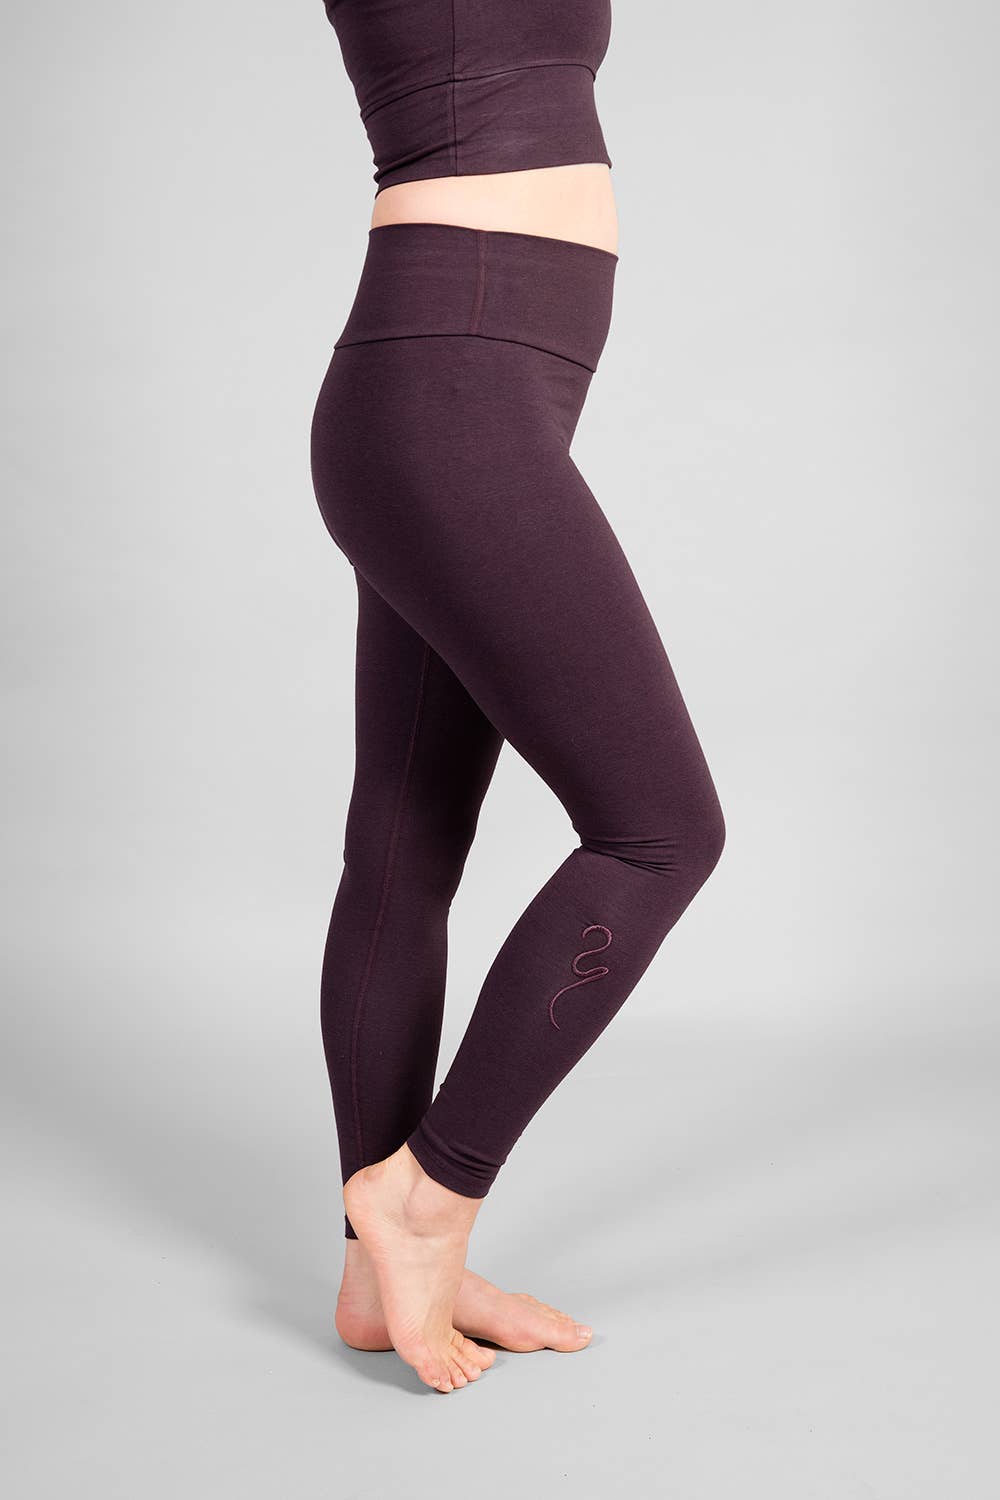 Vega Women's Yoga Leggings - Dark purple